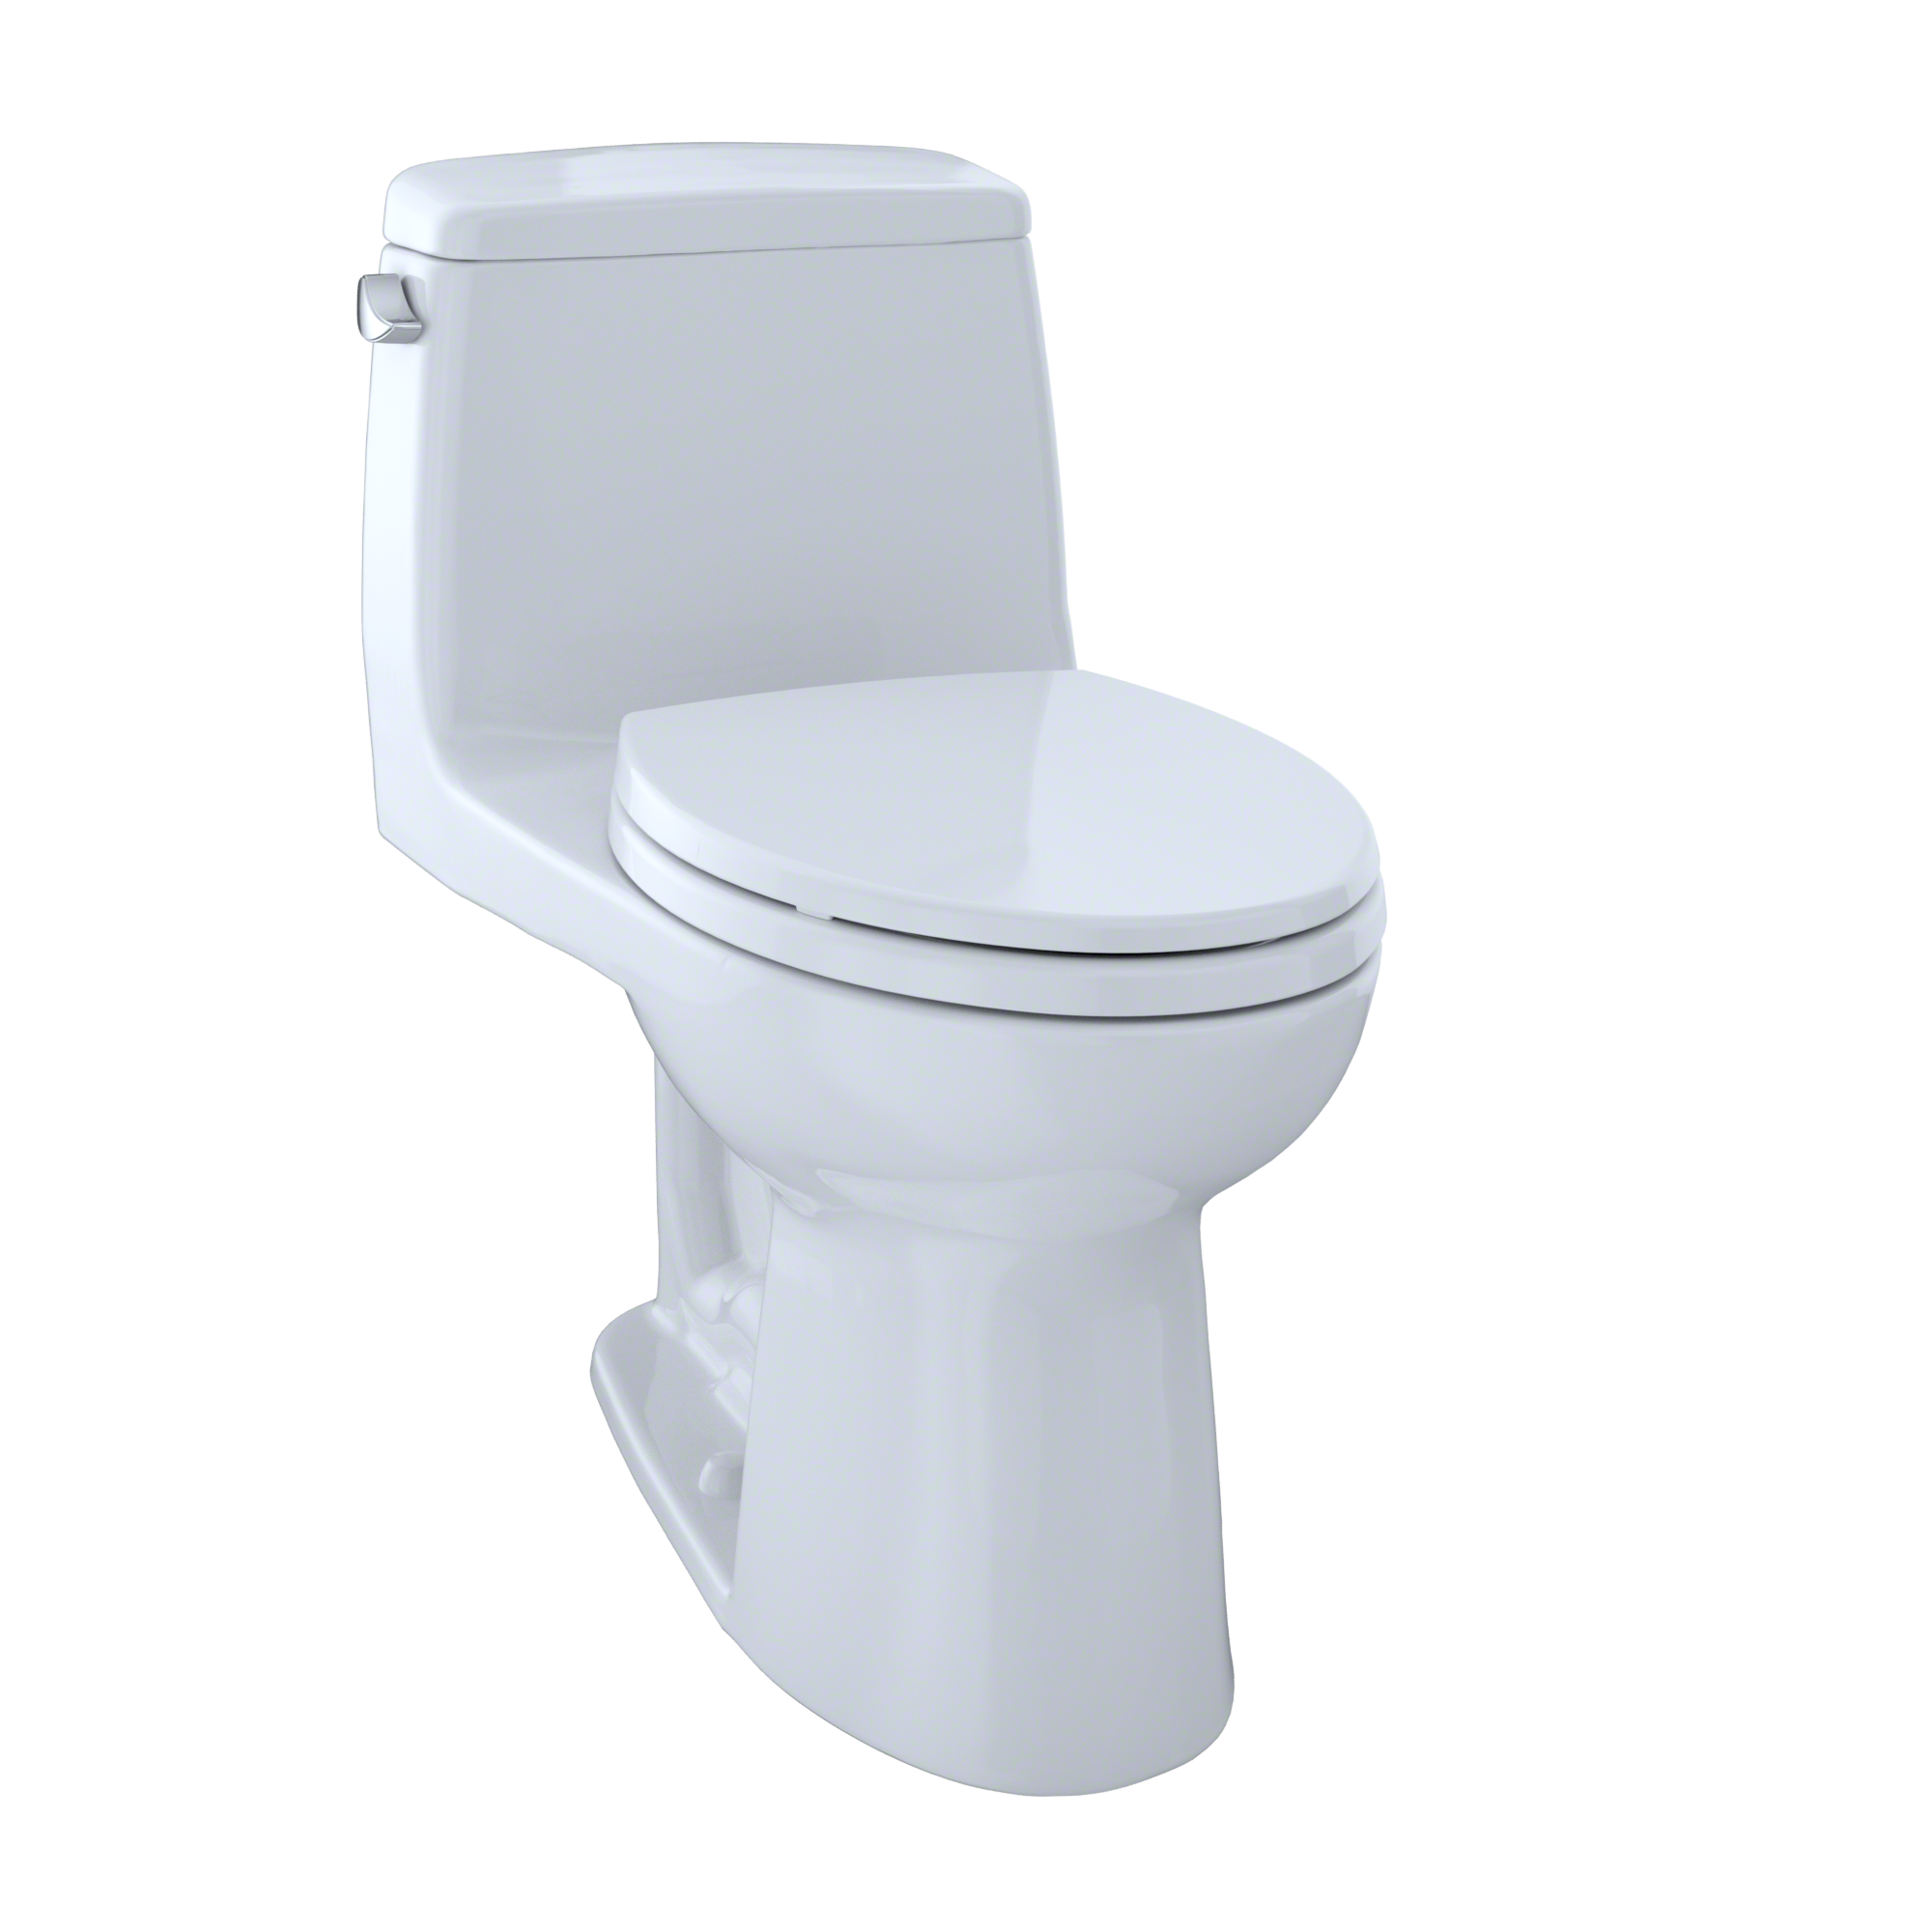 Toilet Seat Cushion – LpM Supply Inc. (LpM)